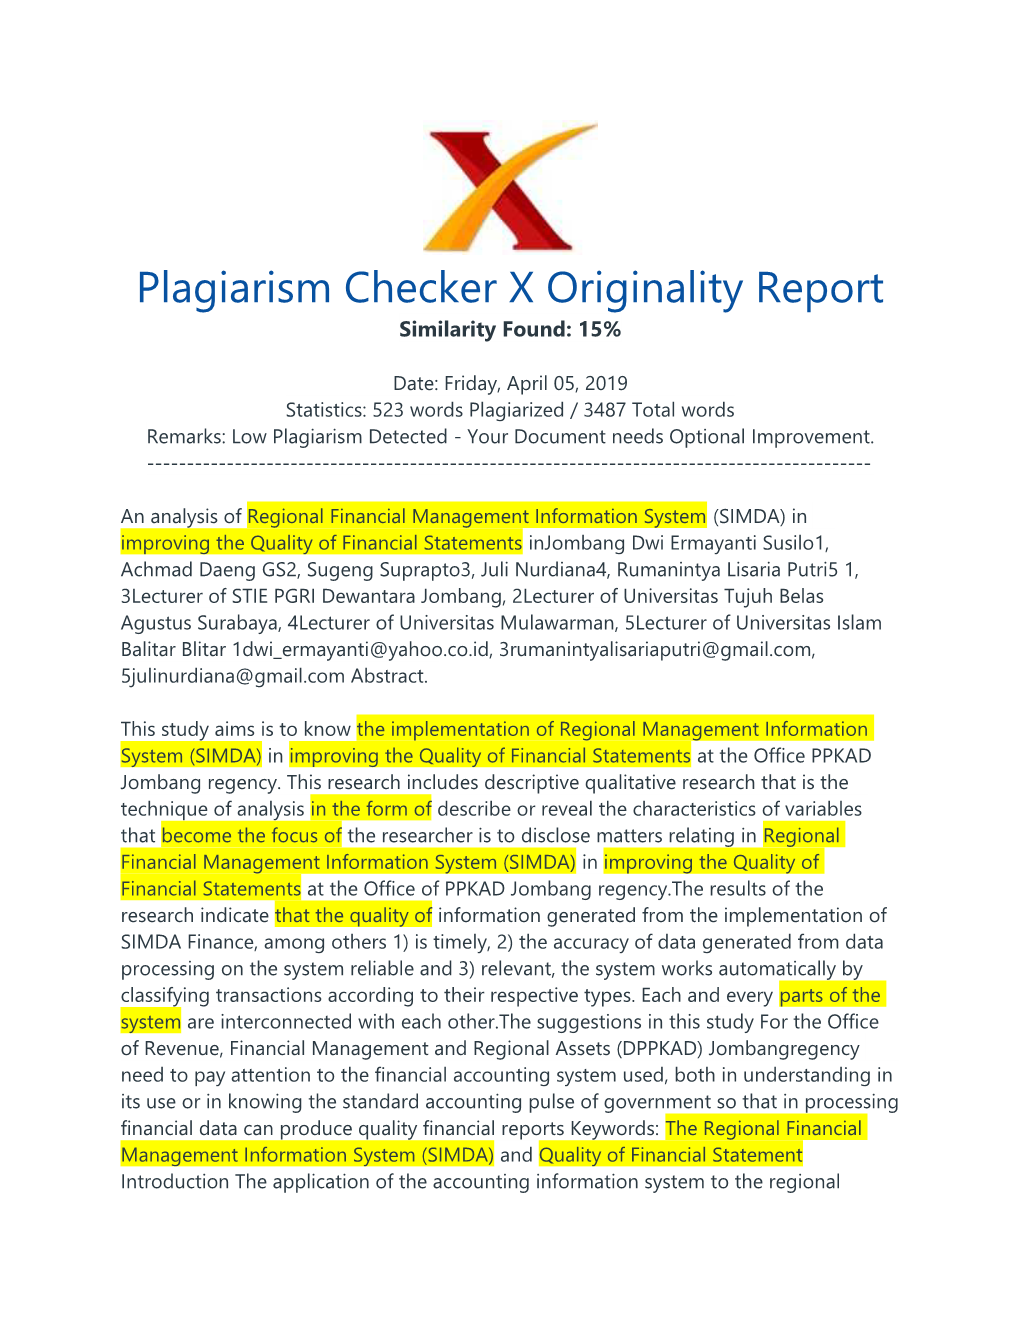 Plagiarism Checker X Originality Report Similarity Found: 15%